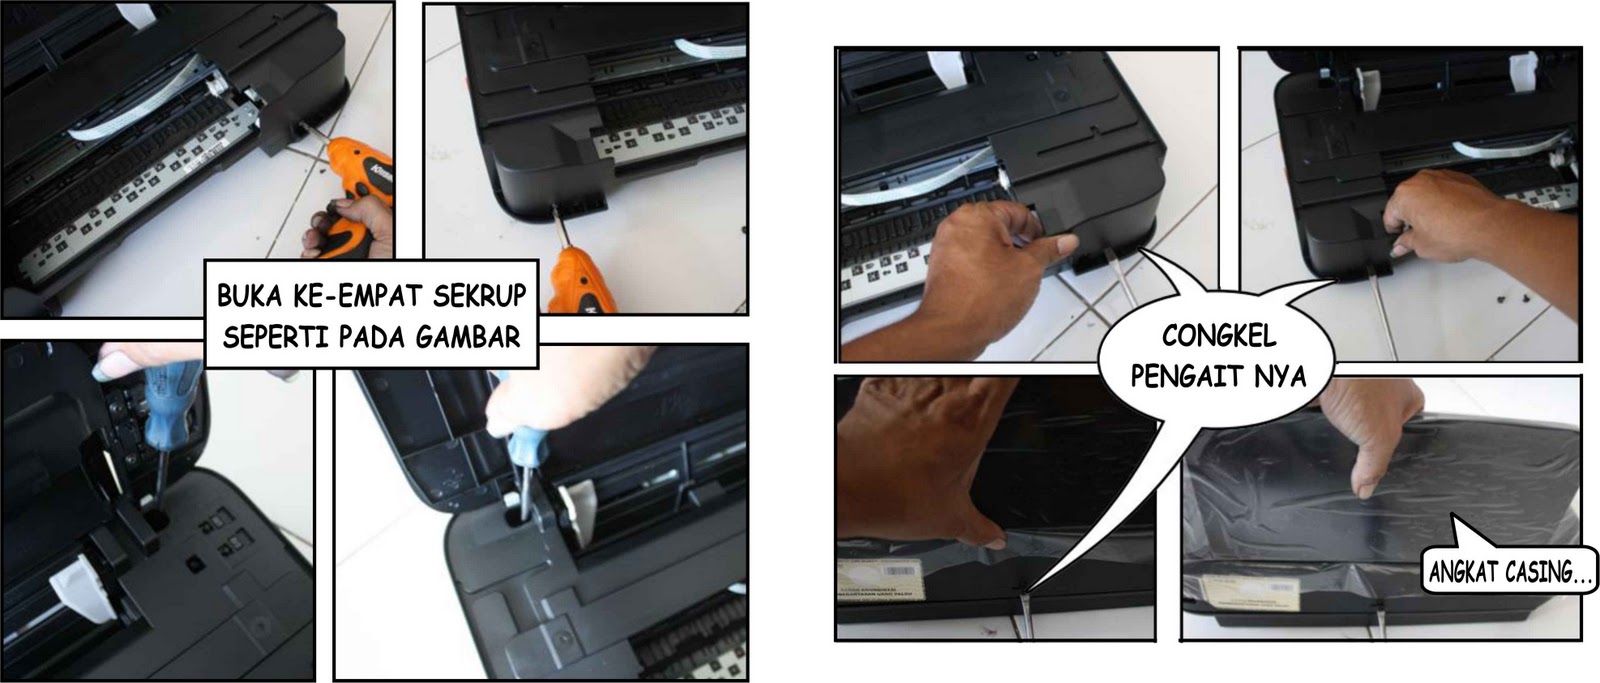 Cara Service Printer